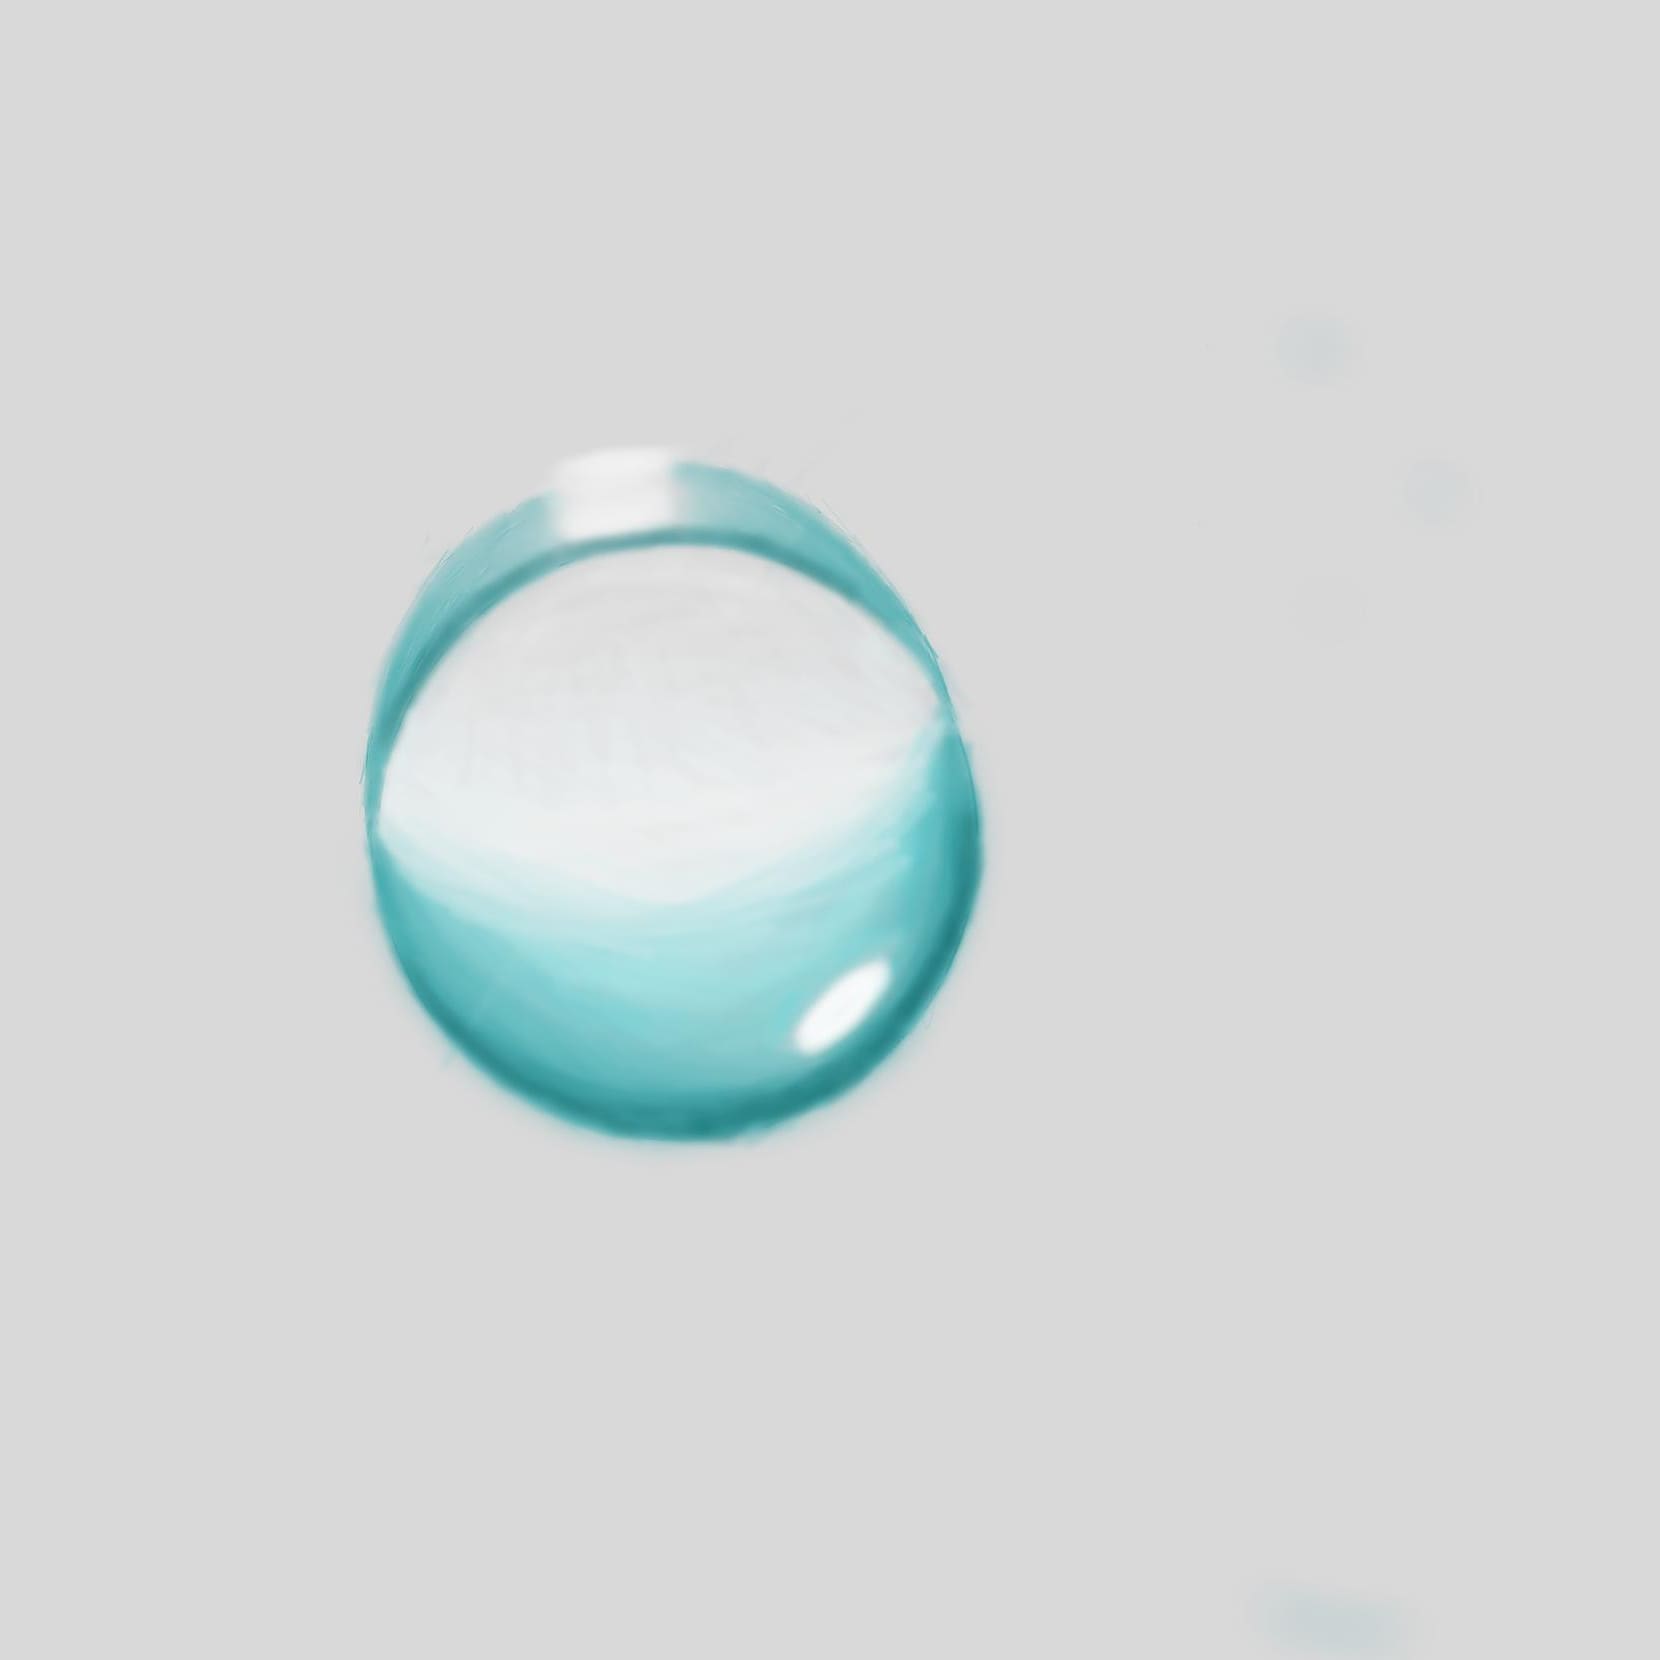 Water Droplet 002